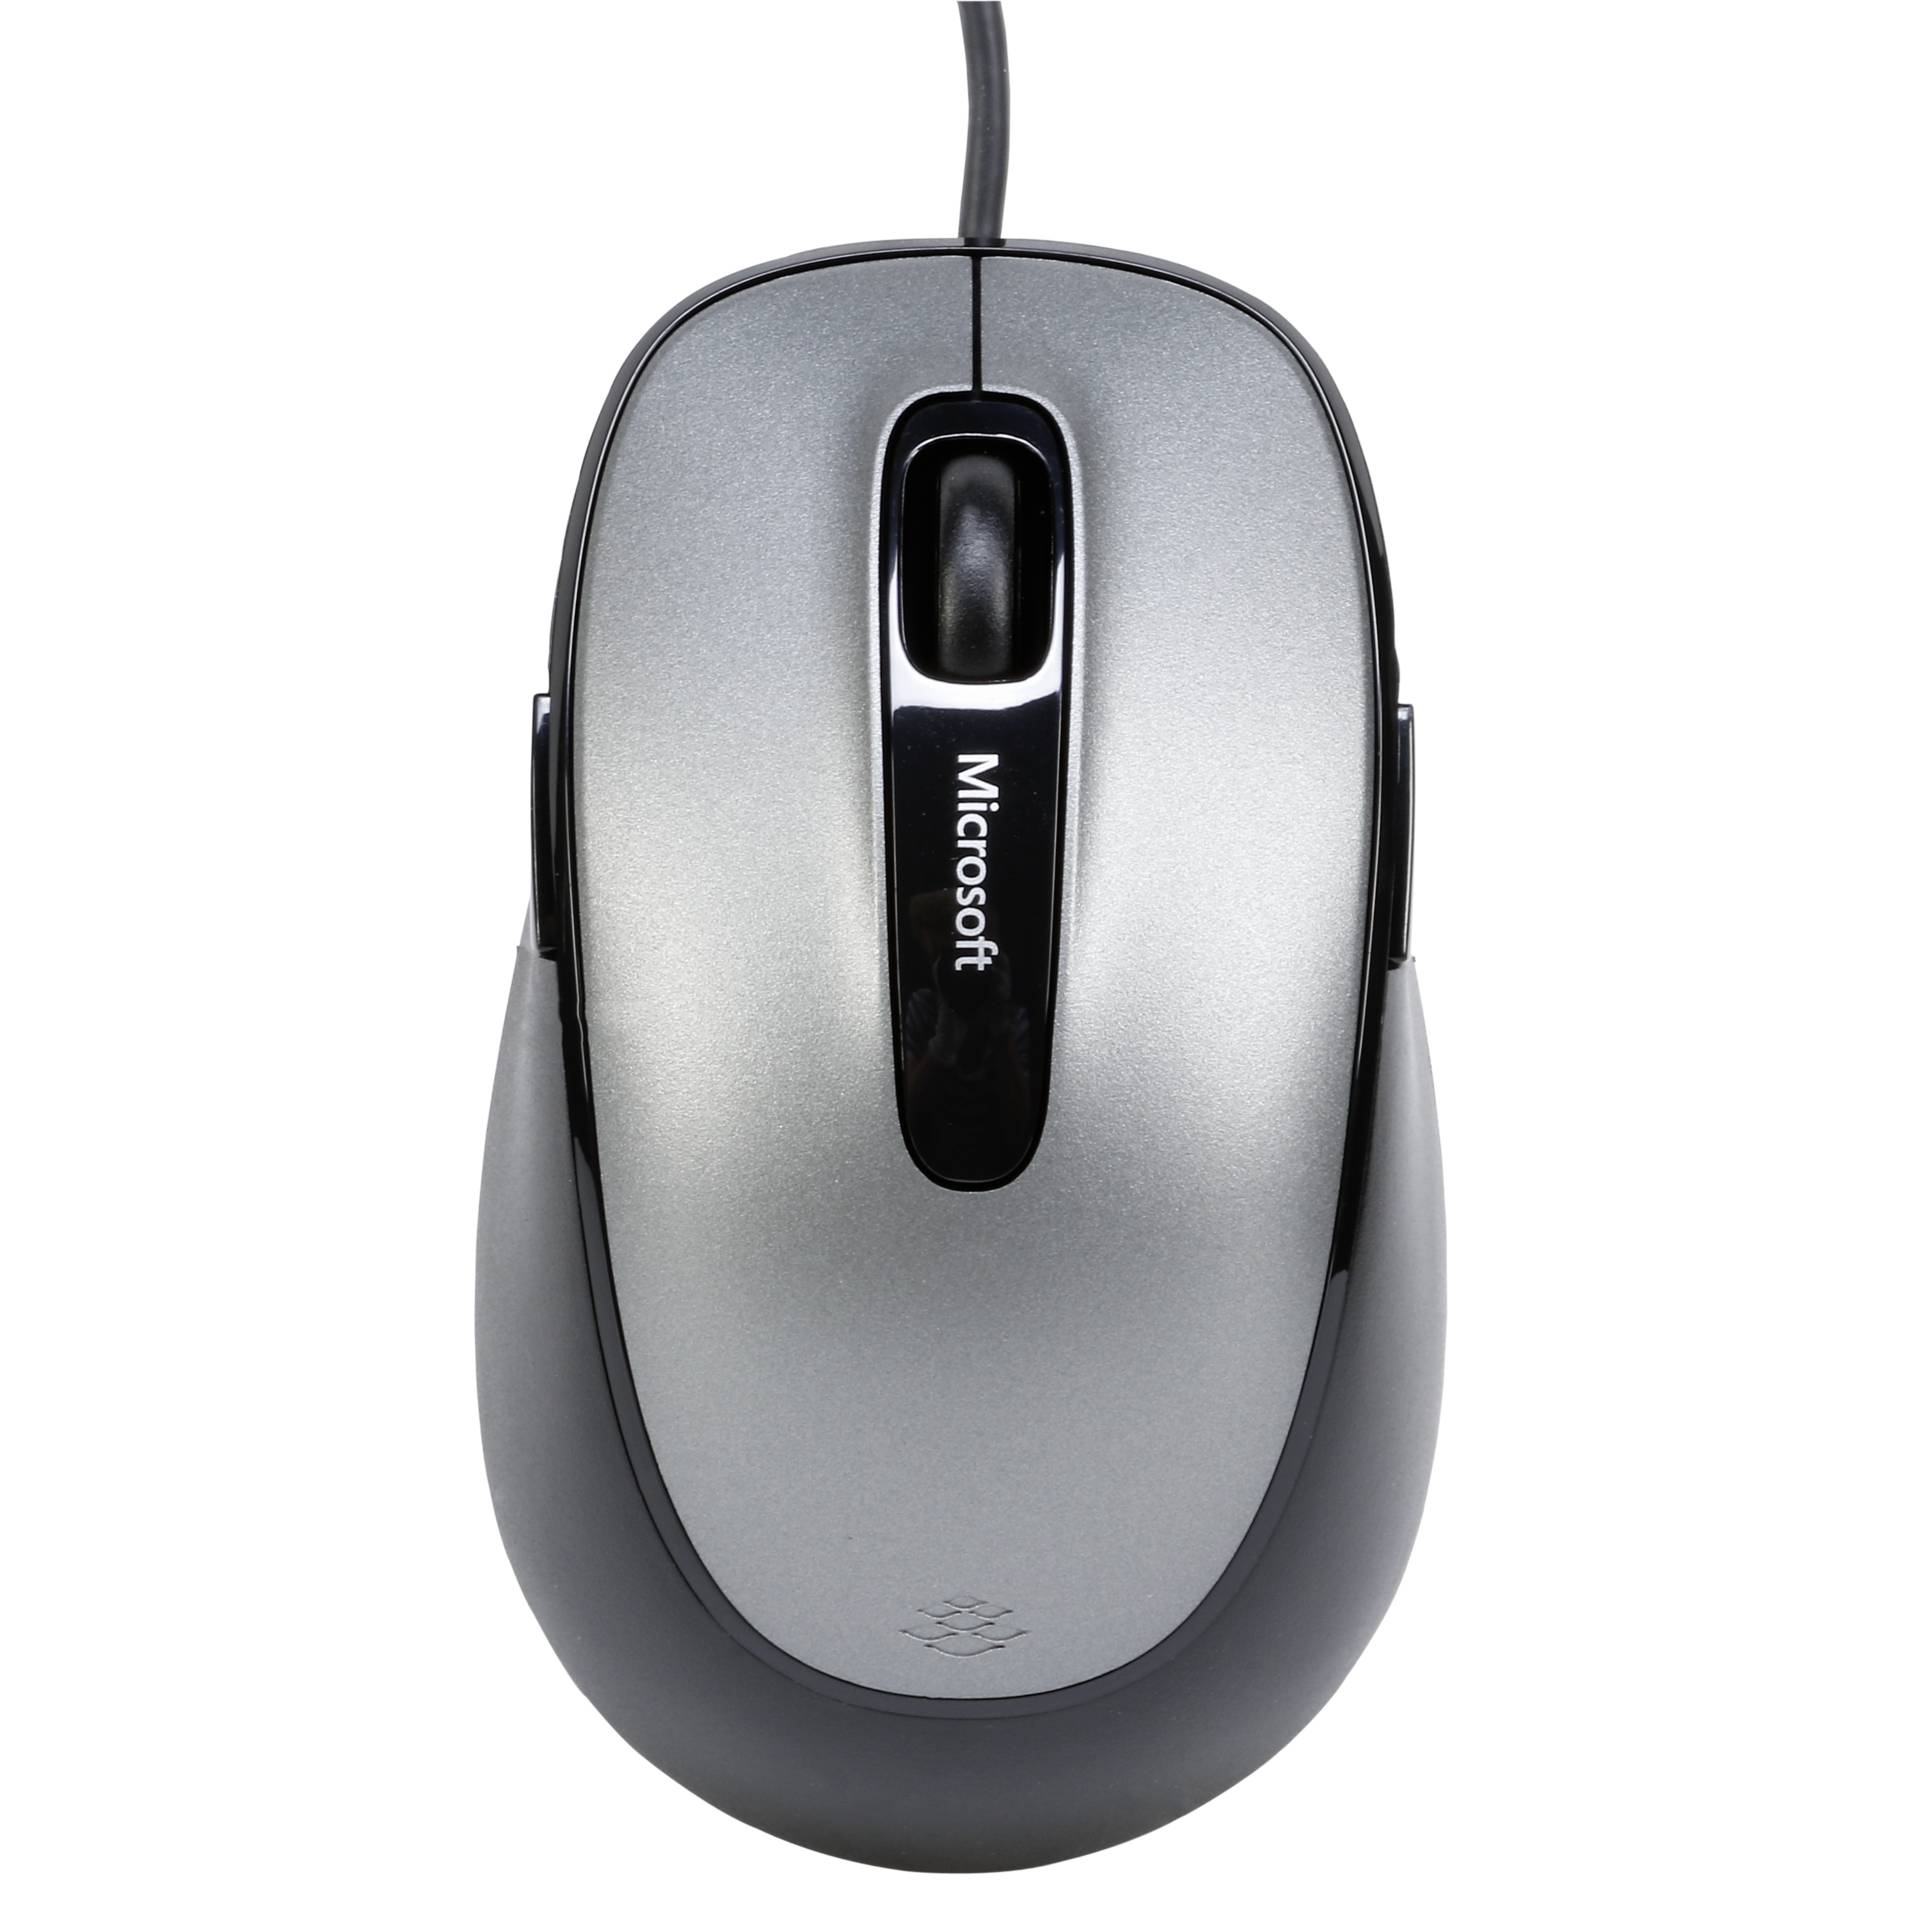 Microsoft Comfort Mouse 4500, Maus, beidhändig, kabelgebunden, USB